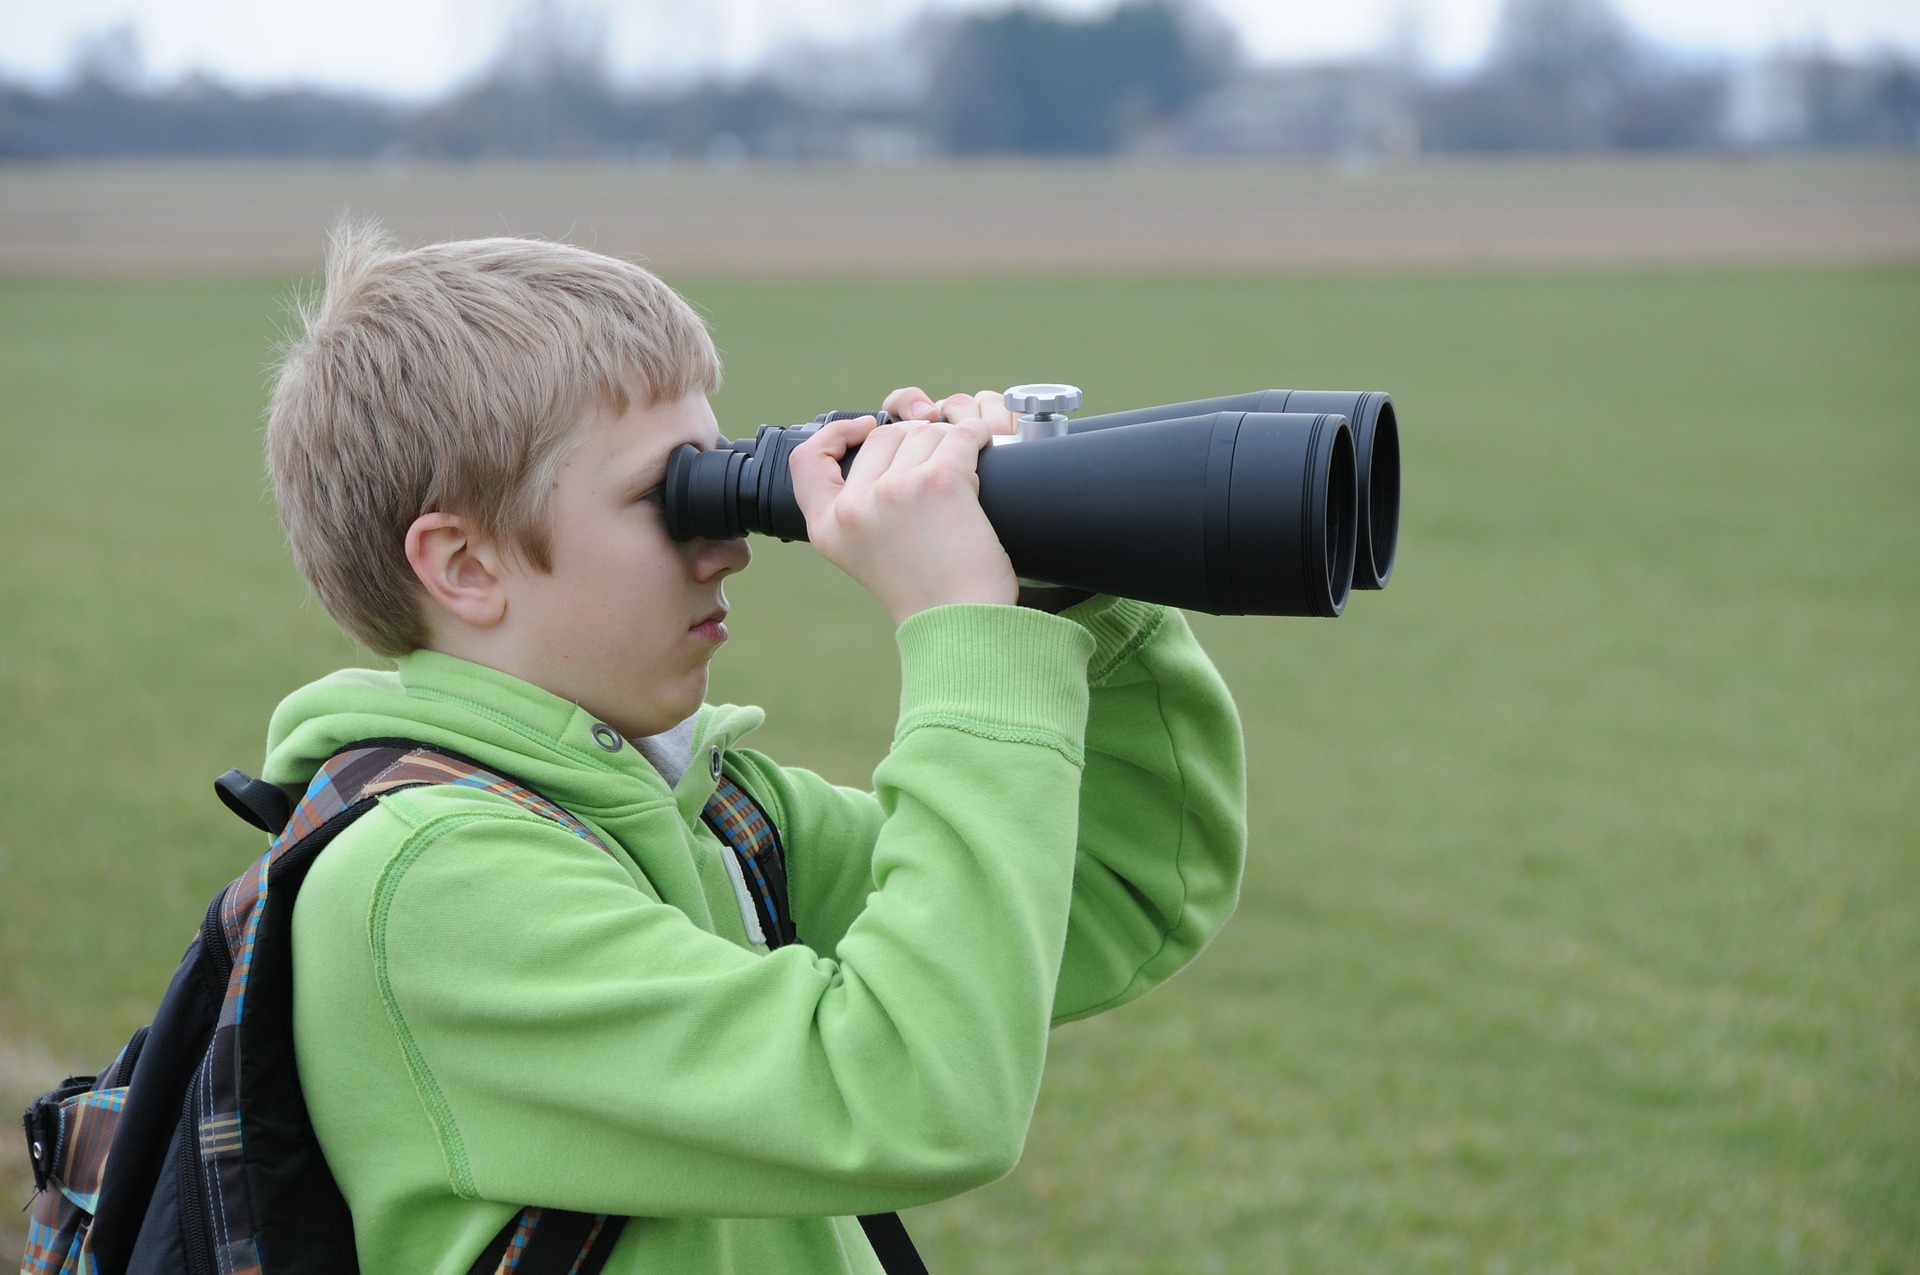 Dude with binoculars searching